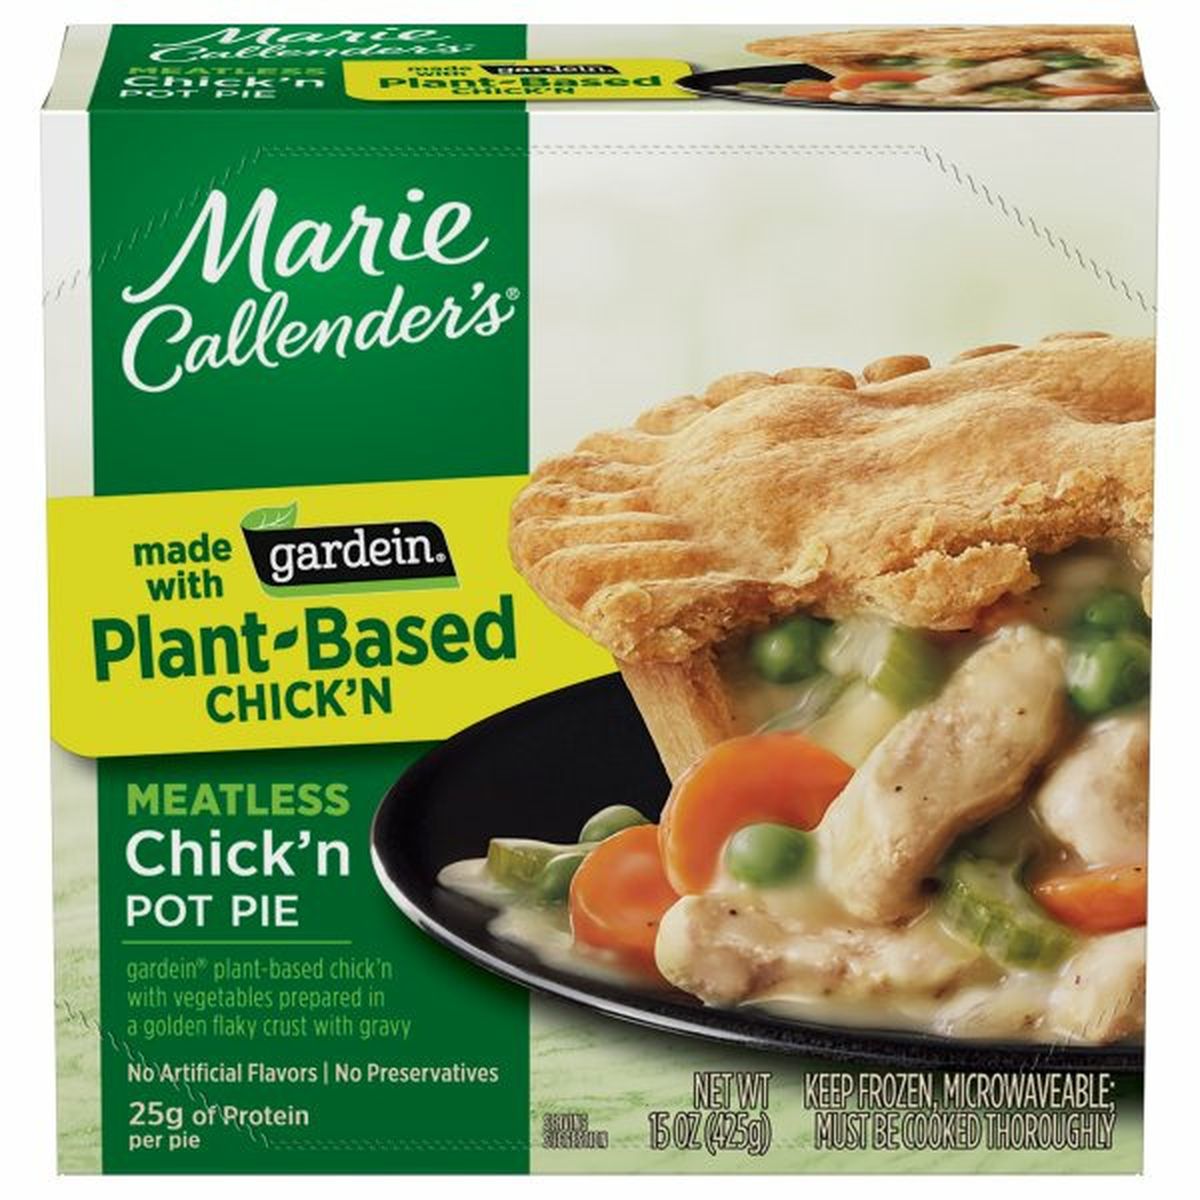 Calories in Marie Callender's Pot Pie, Chick'n, Meatless